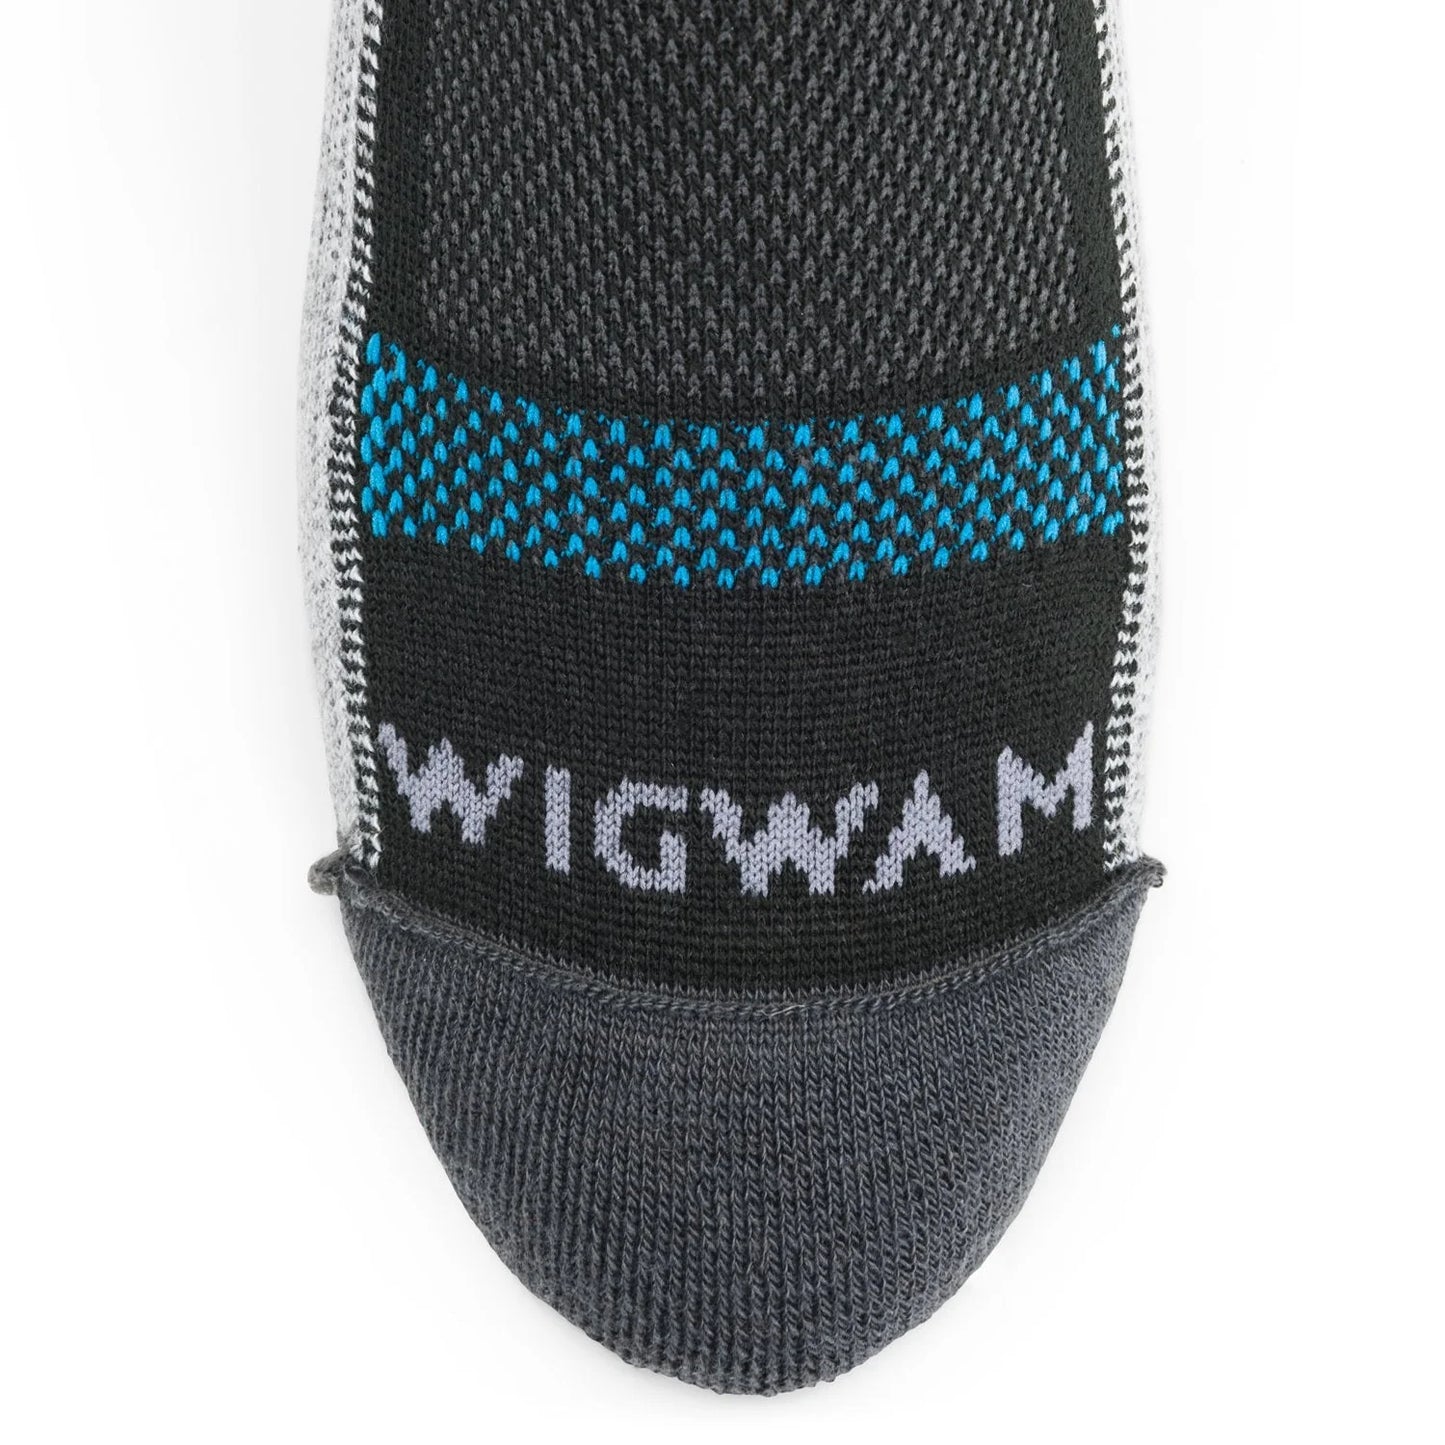 Wigwam | Ultra Cool-Lite Low Sock